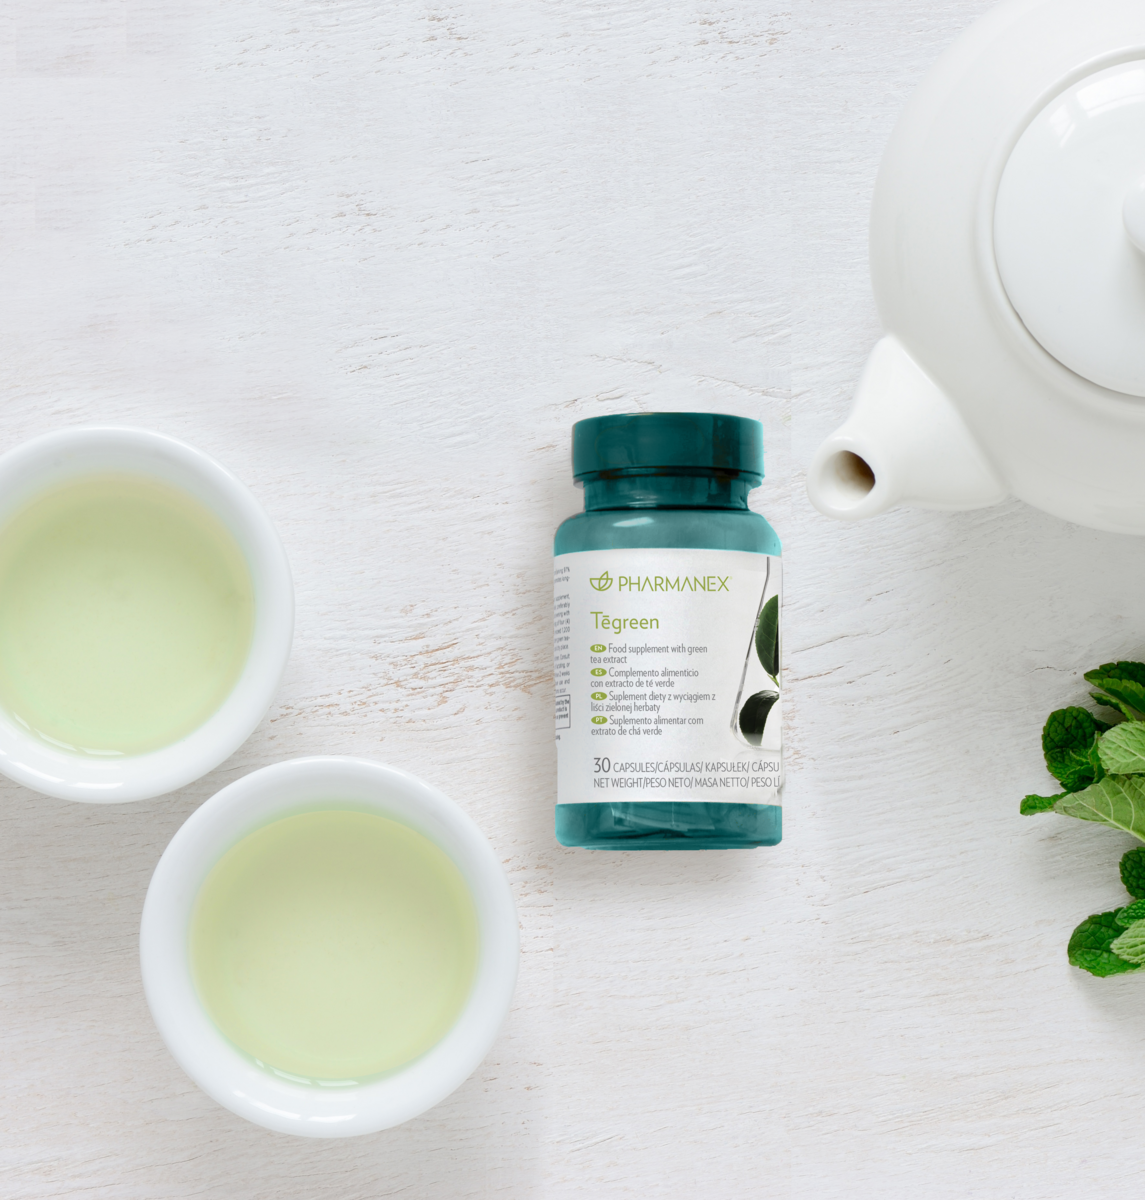 Nu Skin Pharmanex  Tegreen 97® (30 capsules) Green Tea Leaf Extract Natural Antioxidant